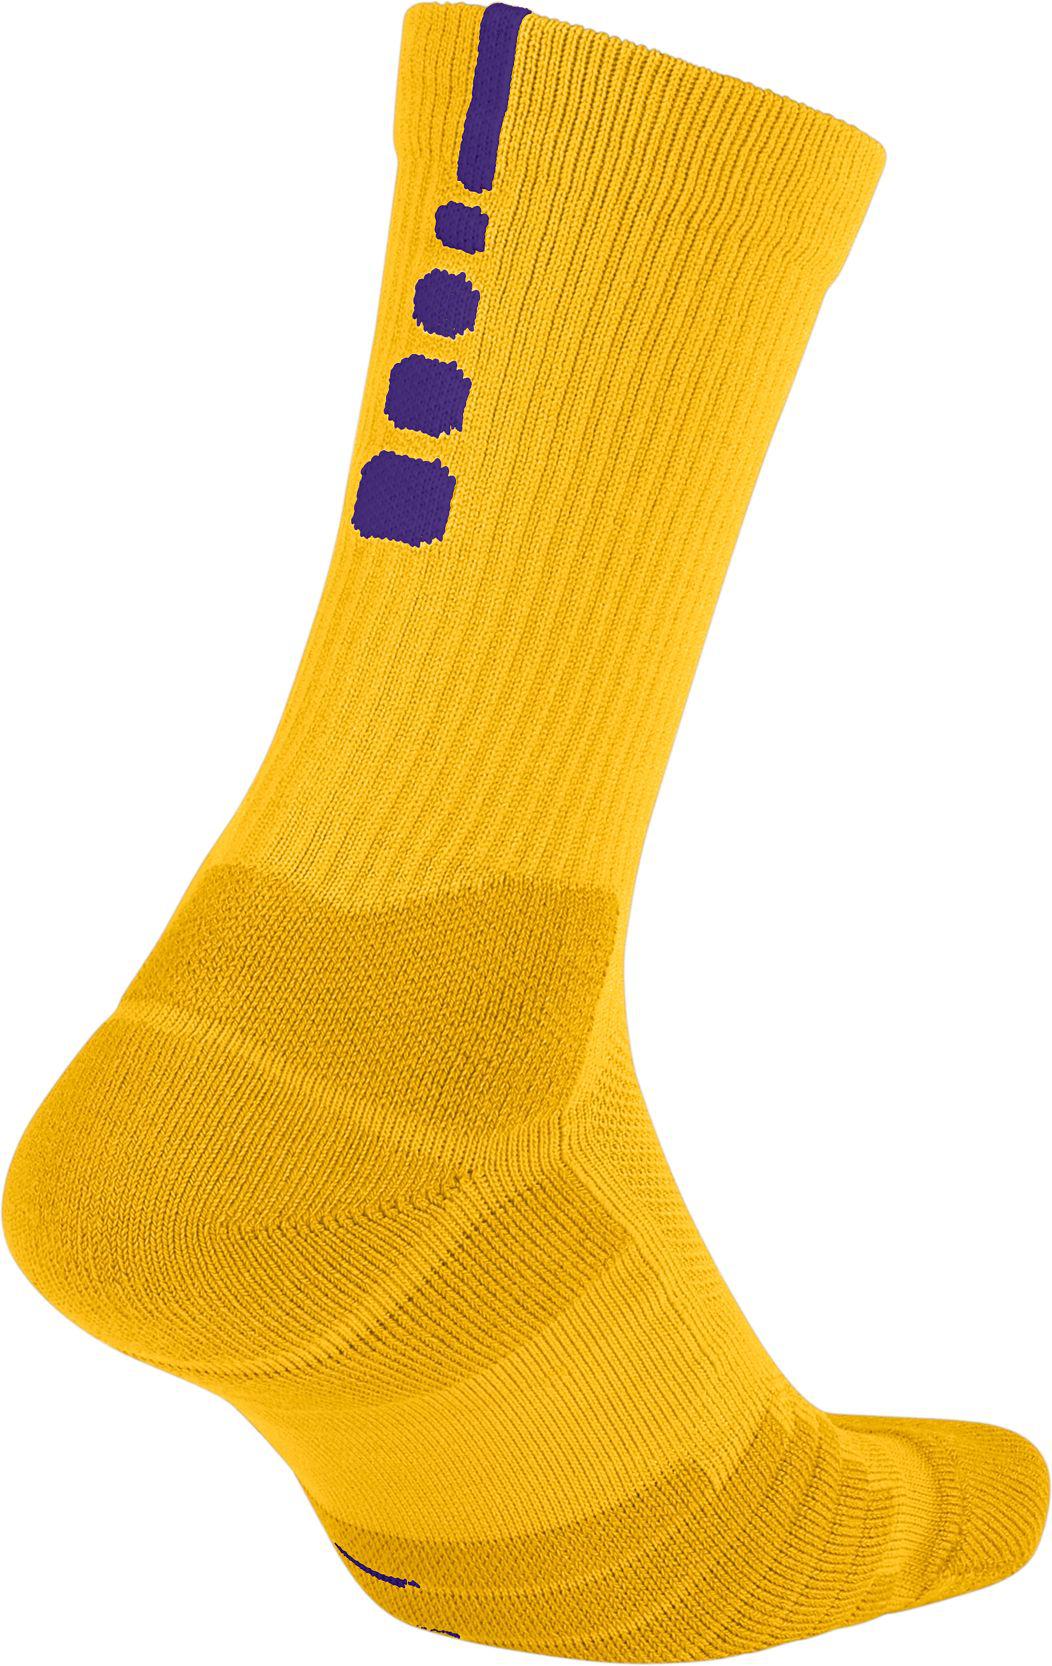 Nike Synthetic Elite Quick Nba Basketball Crew Socks in Yellow/Purple ( Yellow) for Men - Lyst